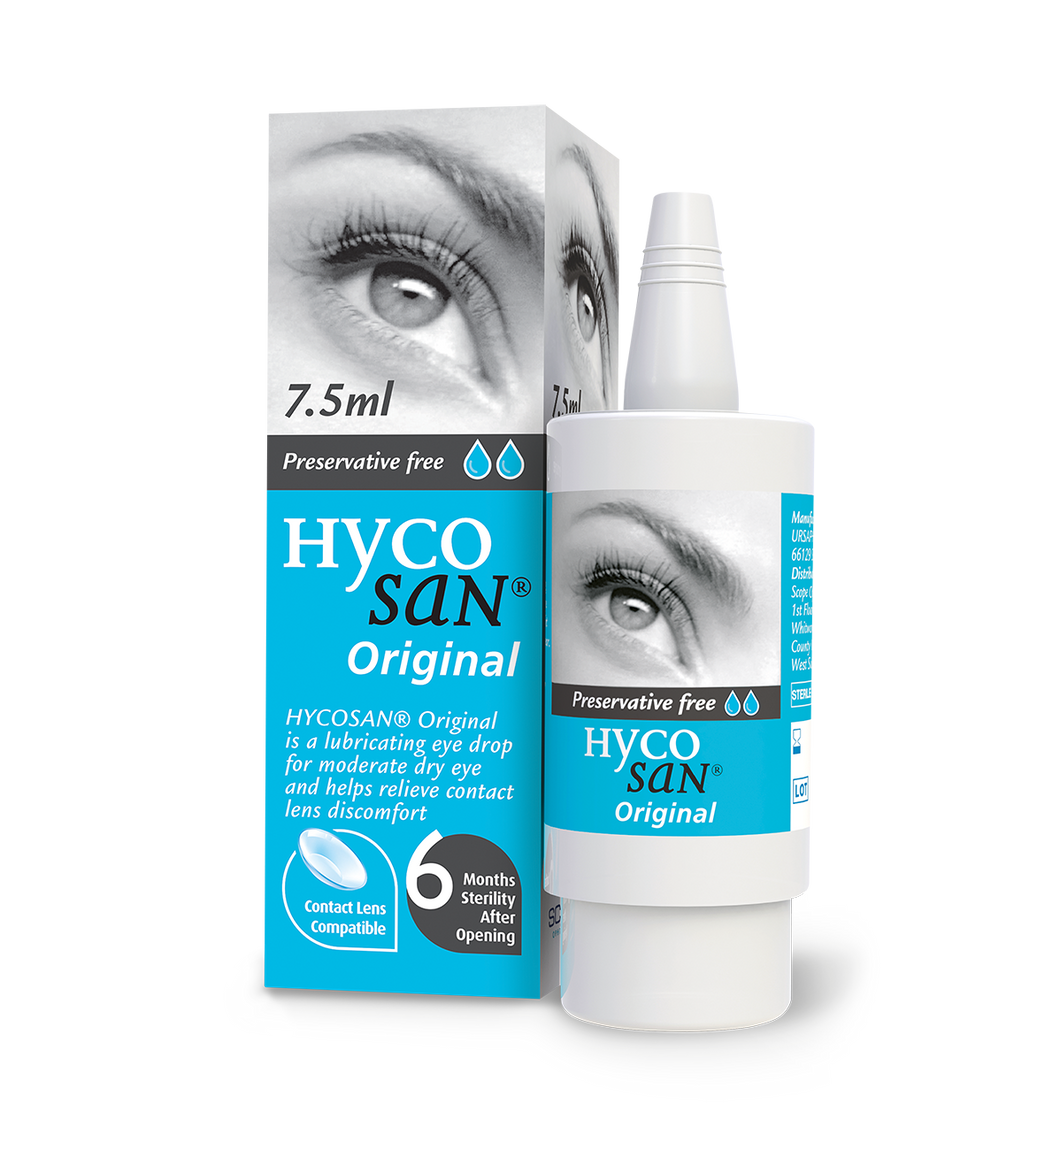 Hycosan - Original 7.5ml